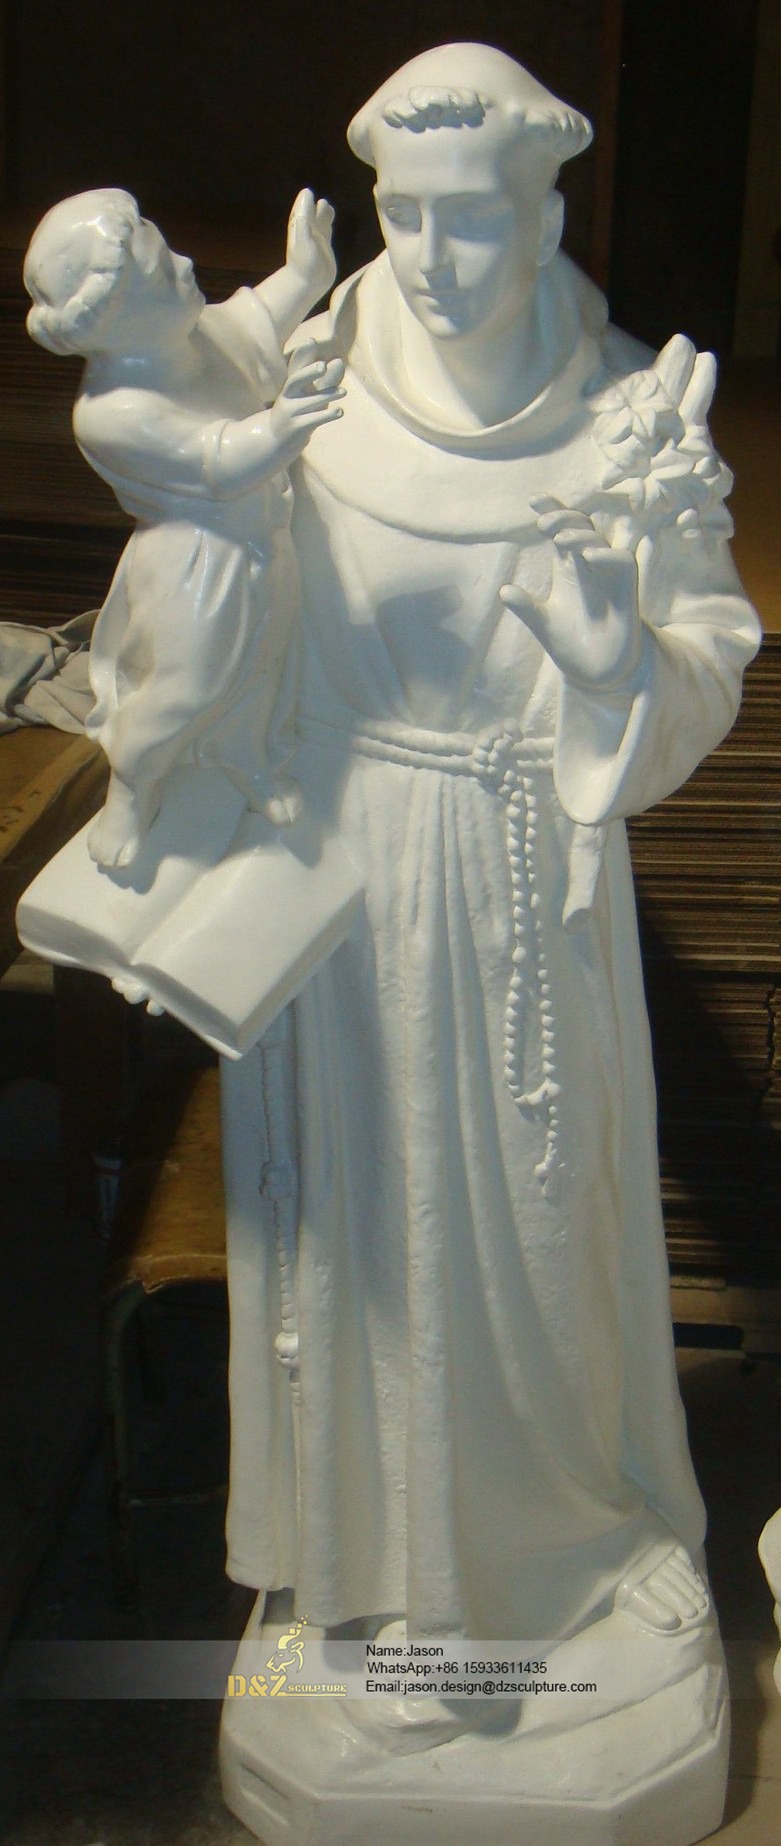 St. anthony statue 